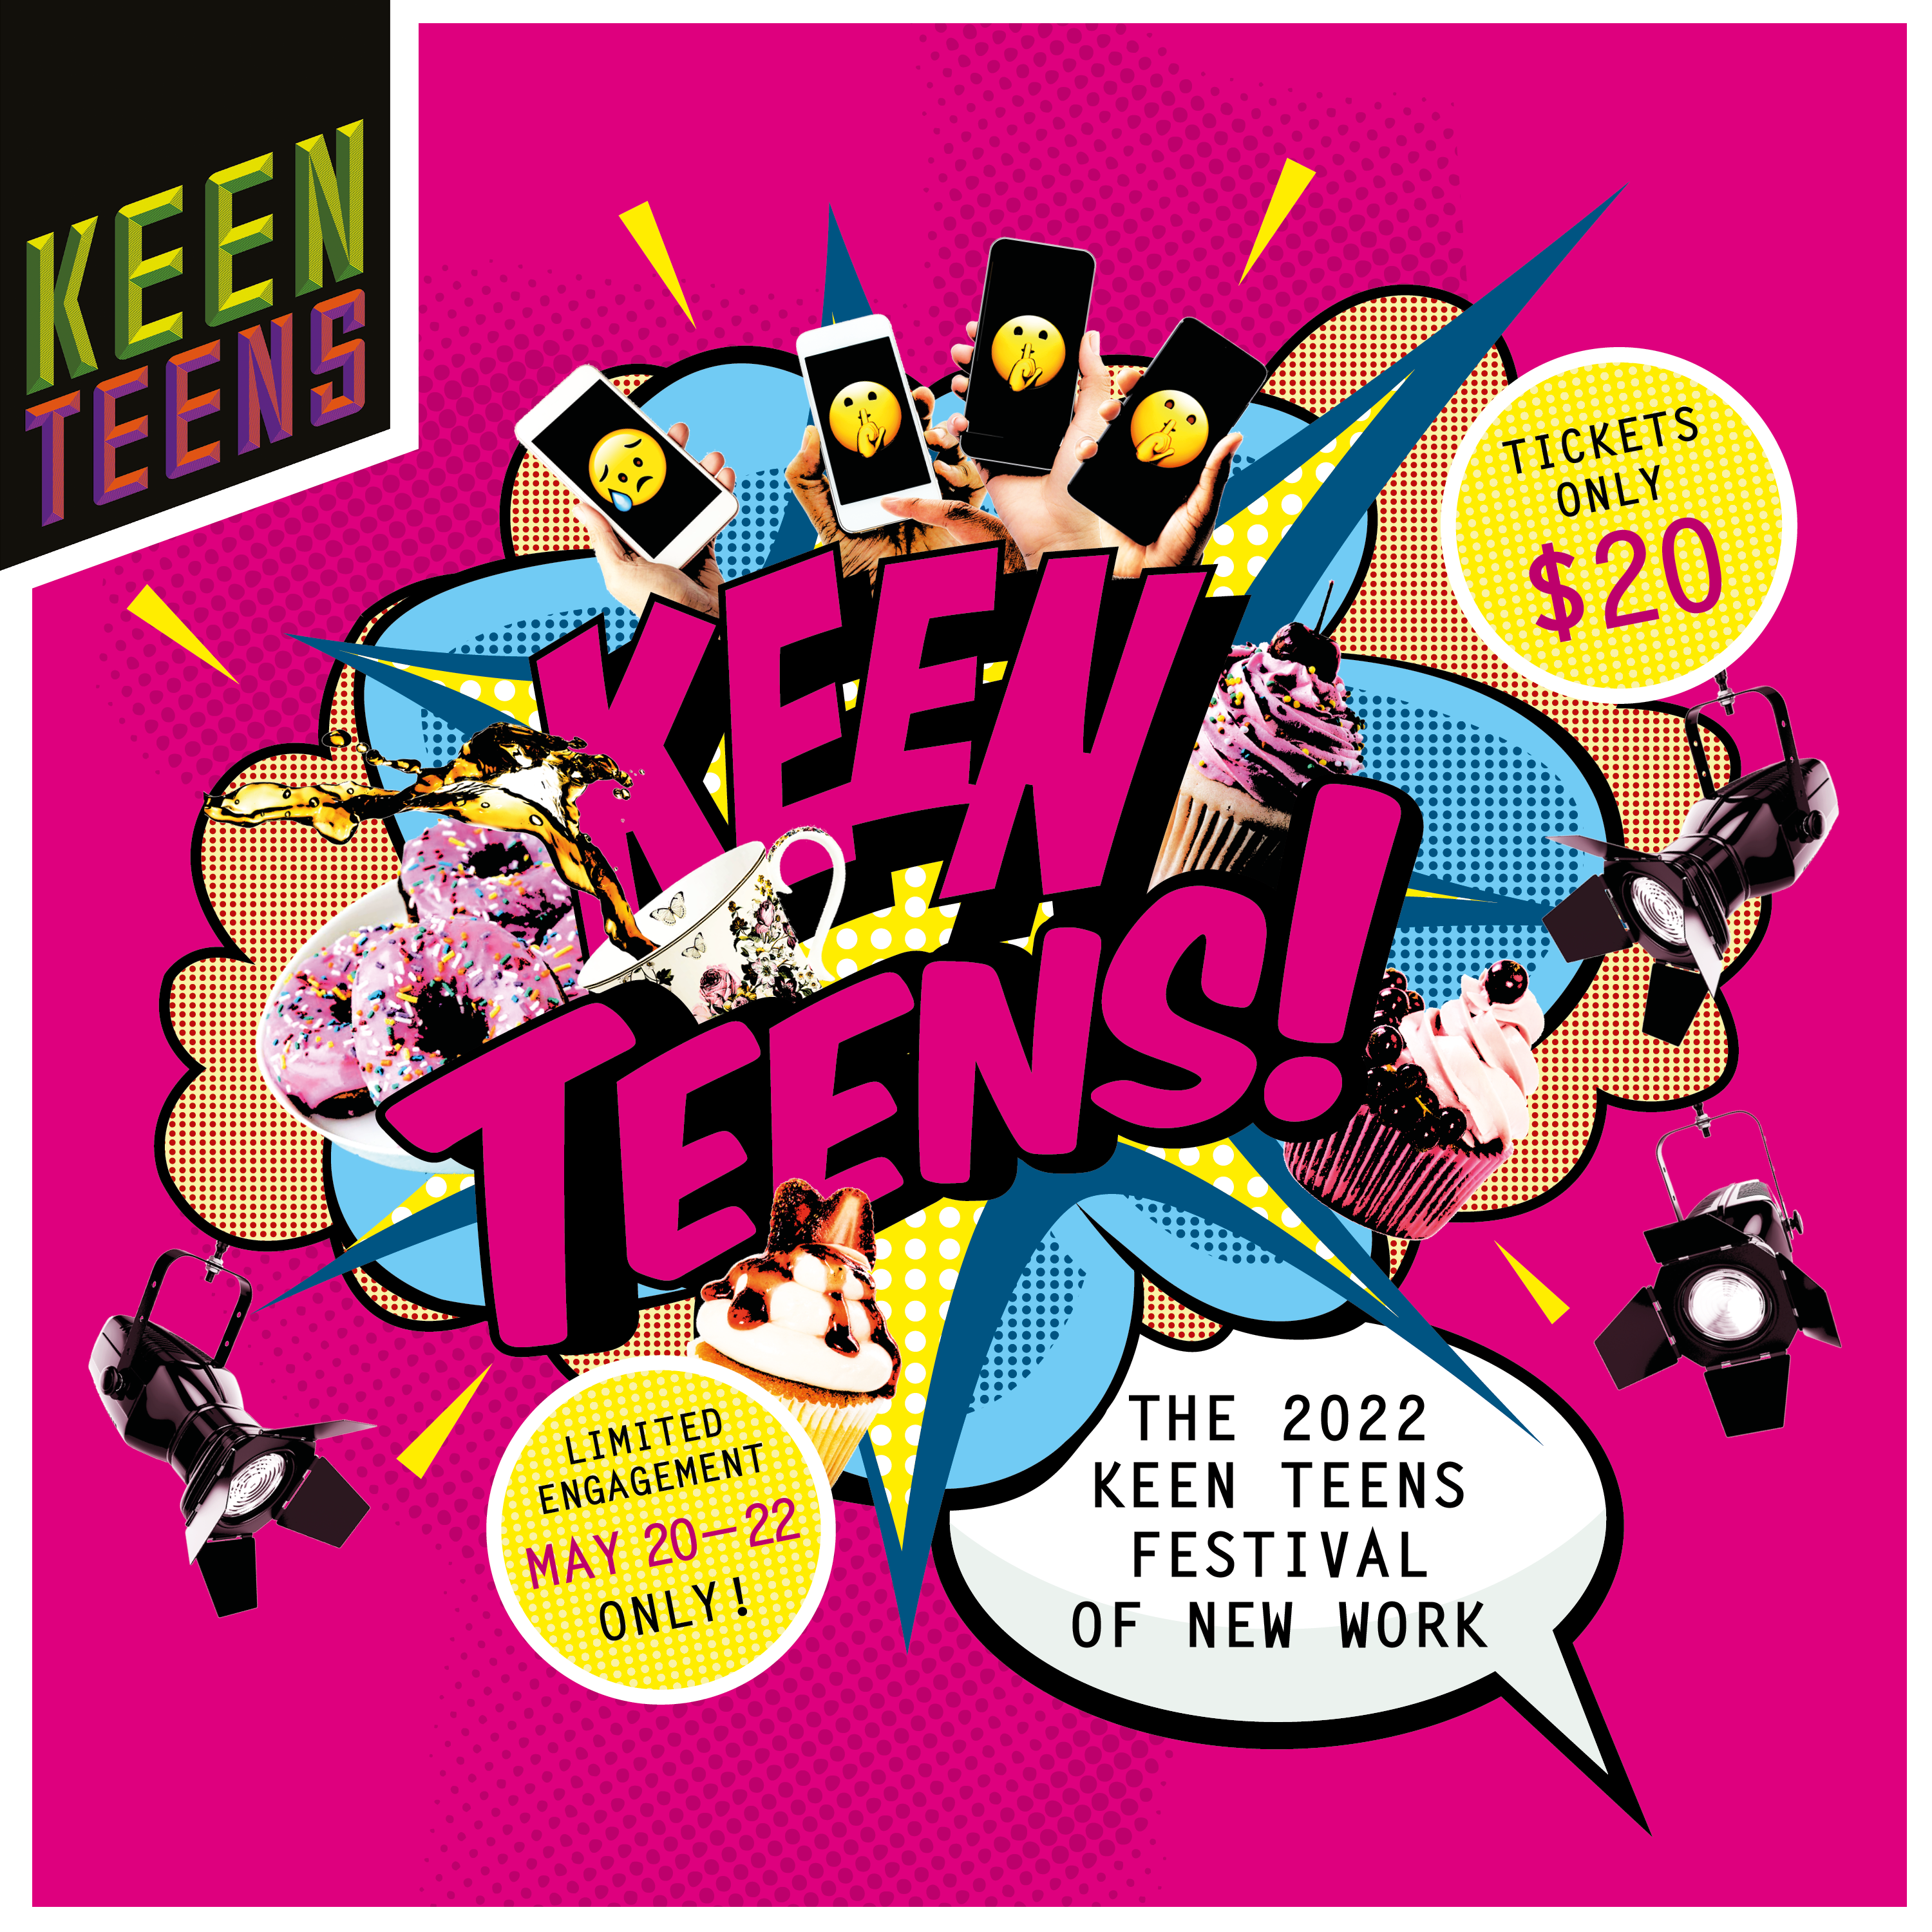 Keen Teens Festival of New Work 2022